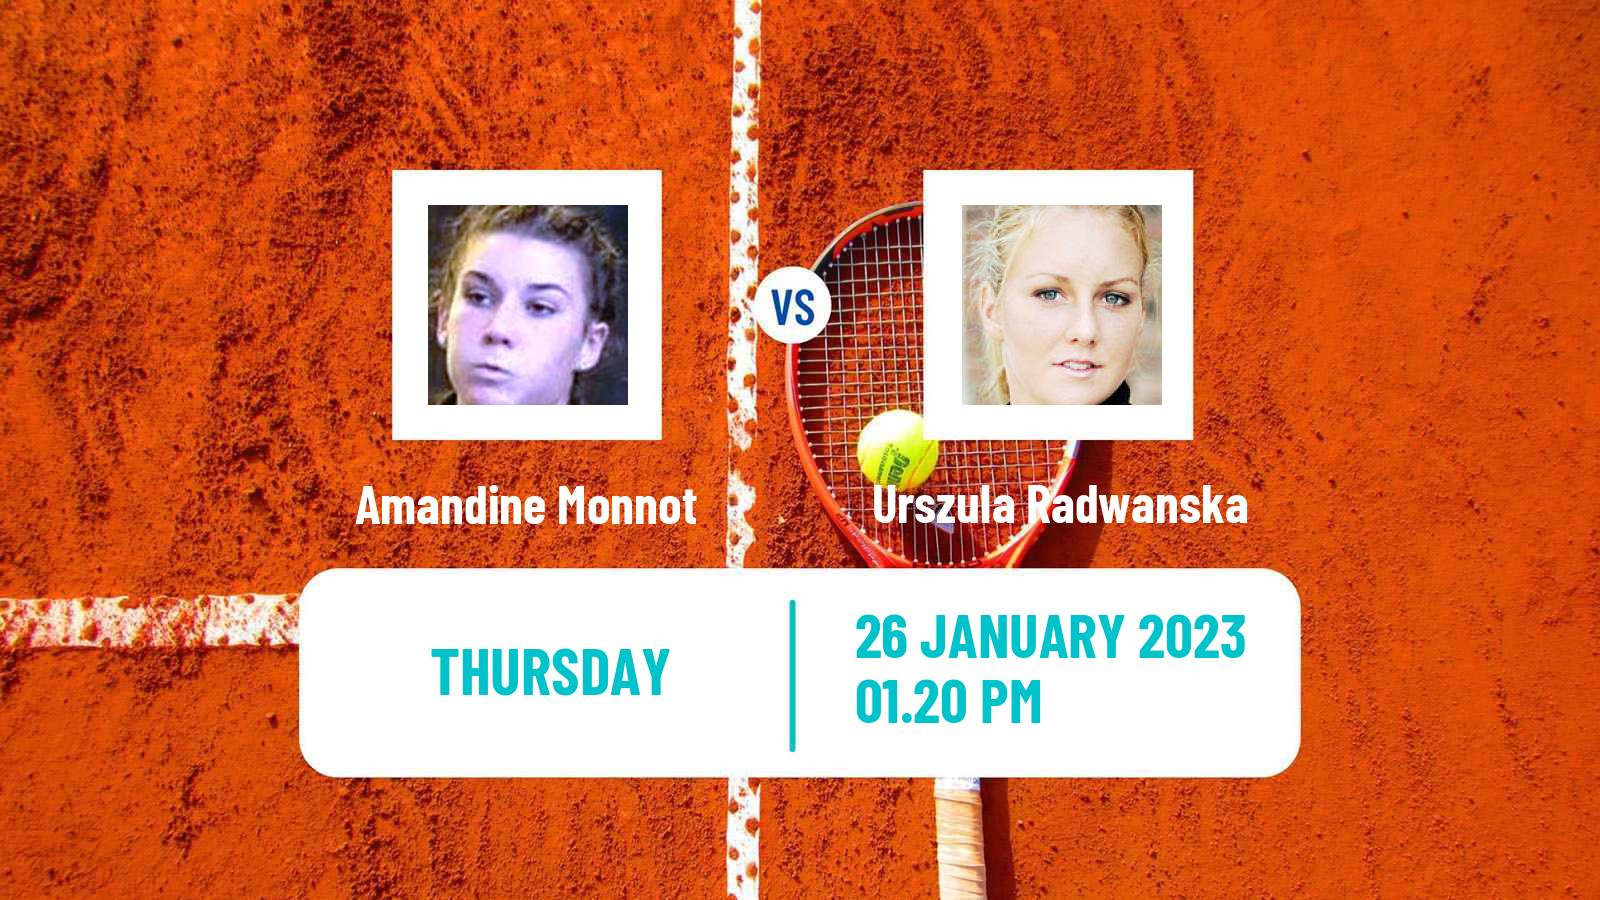 Tennis ITF Tournaments Amandine Monnot - Urszula Radwanska